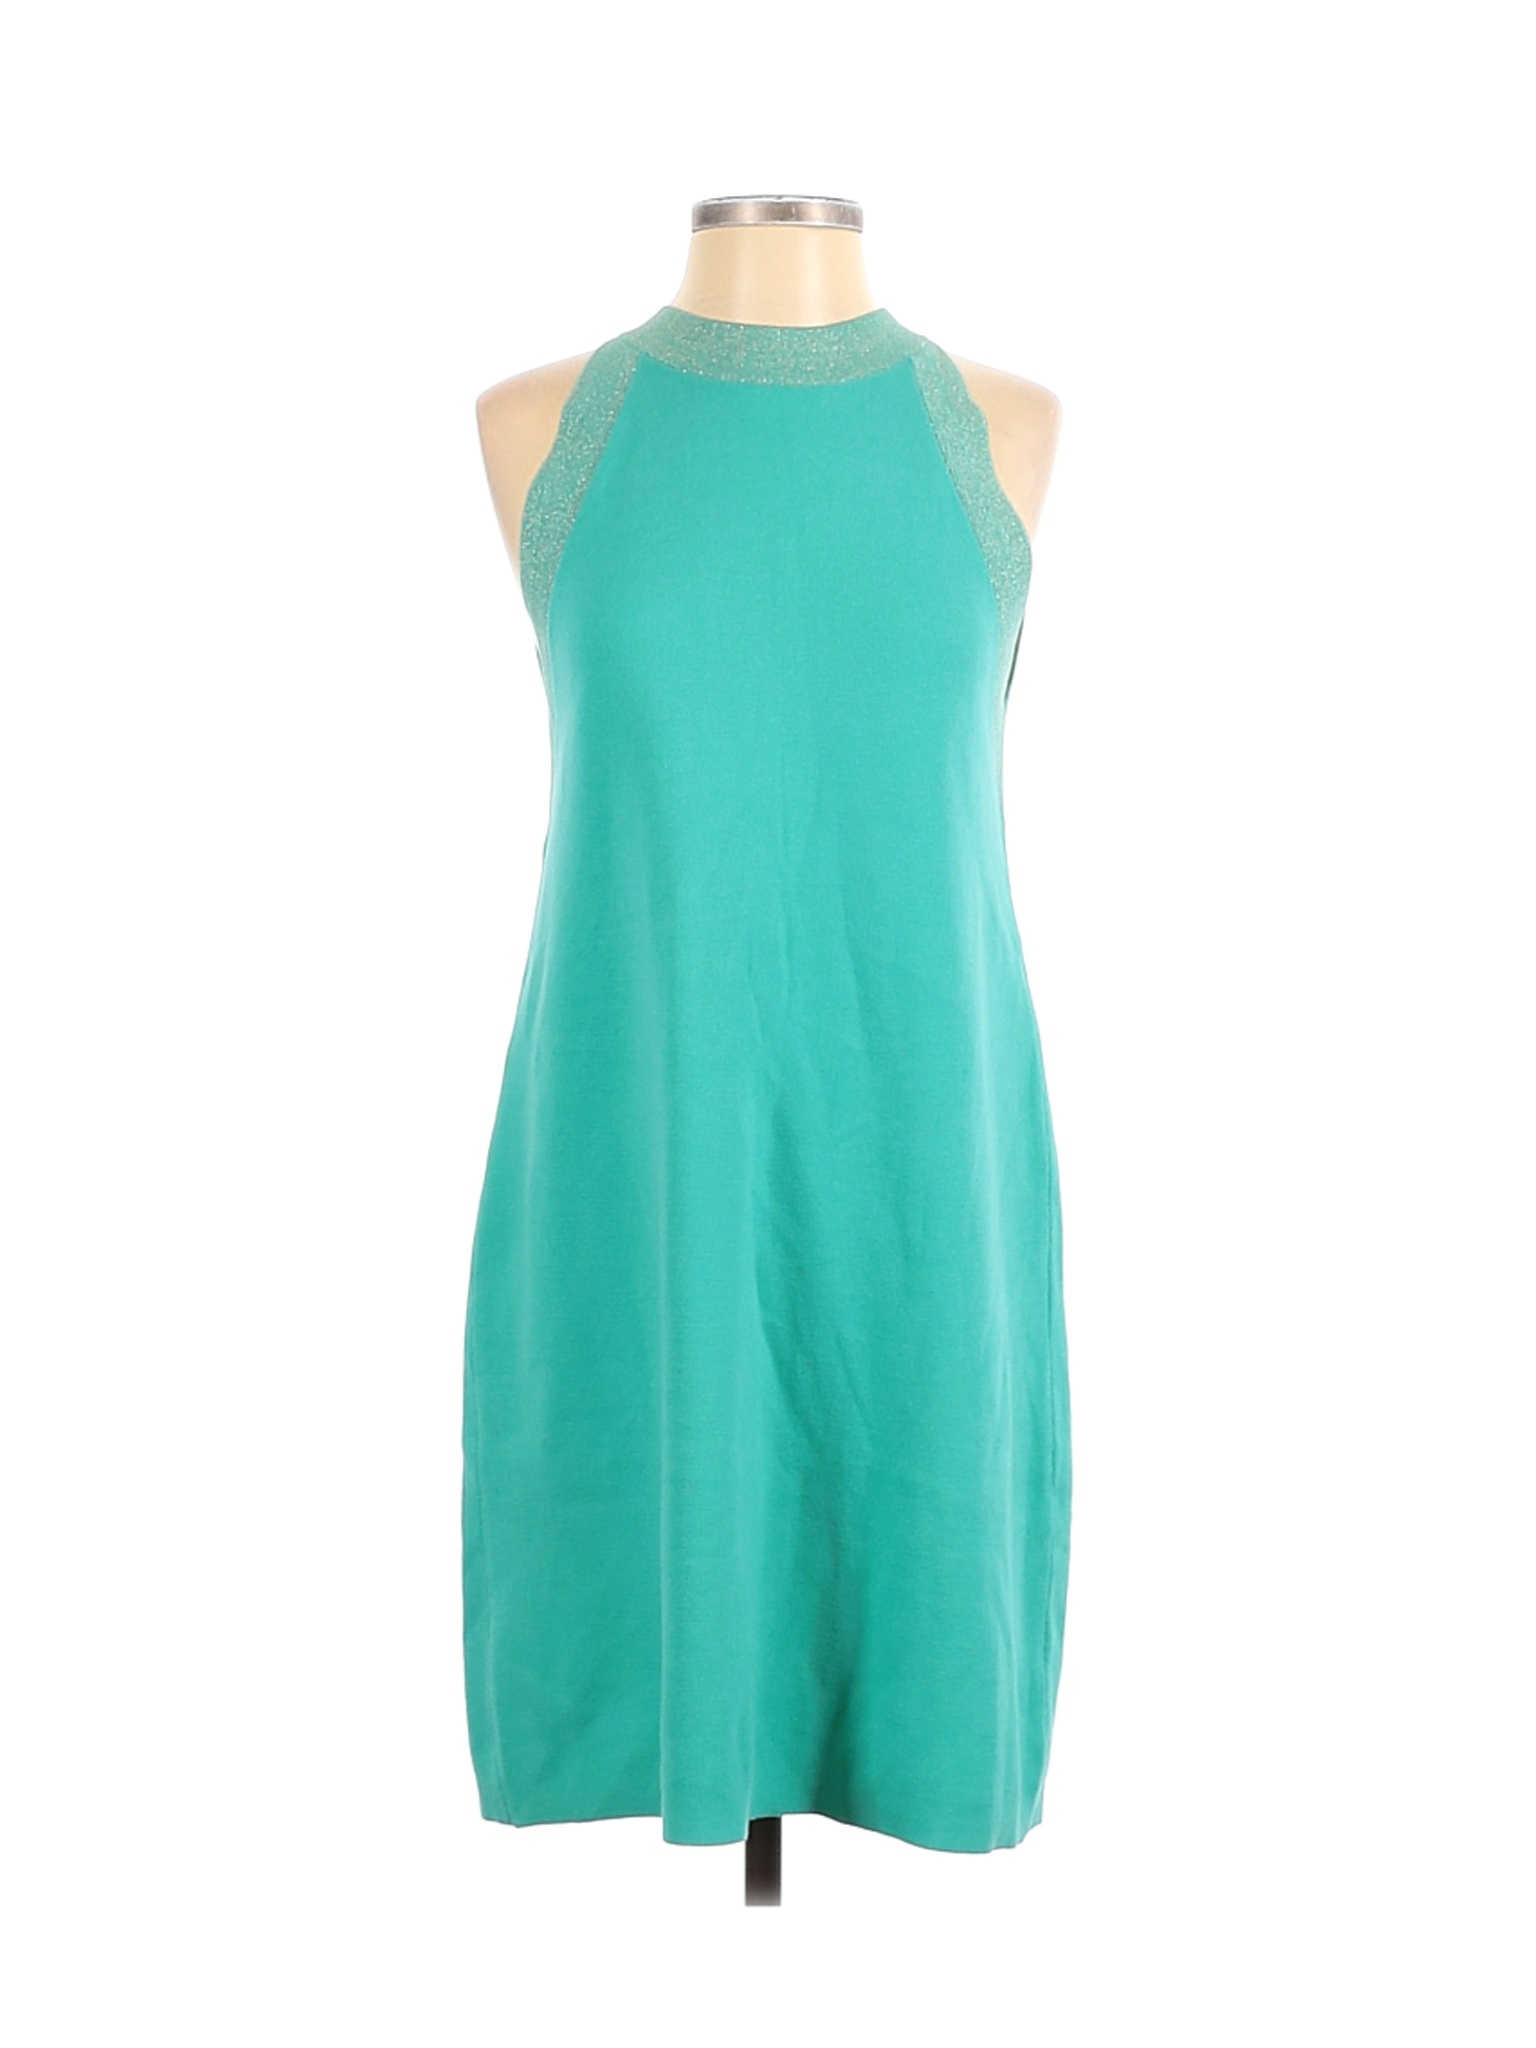 Trina Trina Turk Women Blue Casual Dress S | eBay